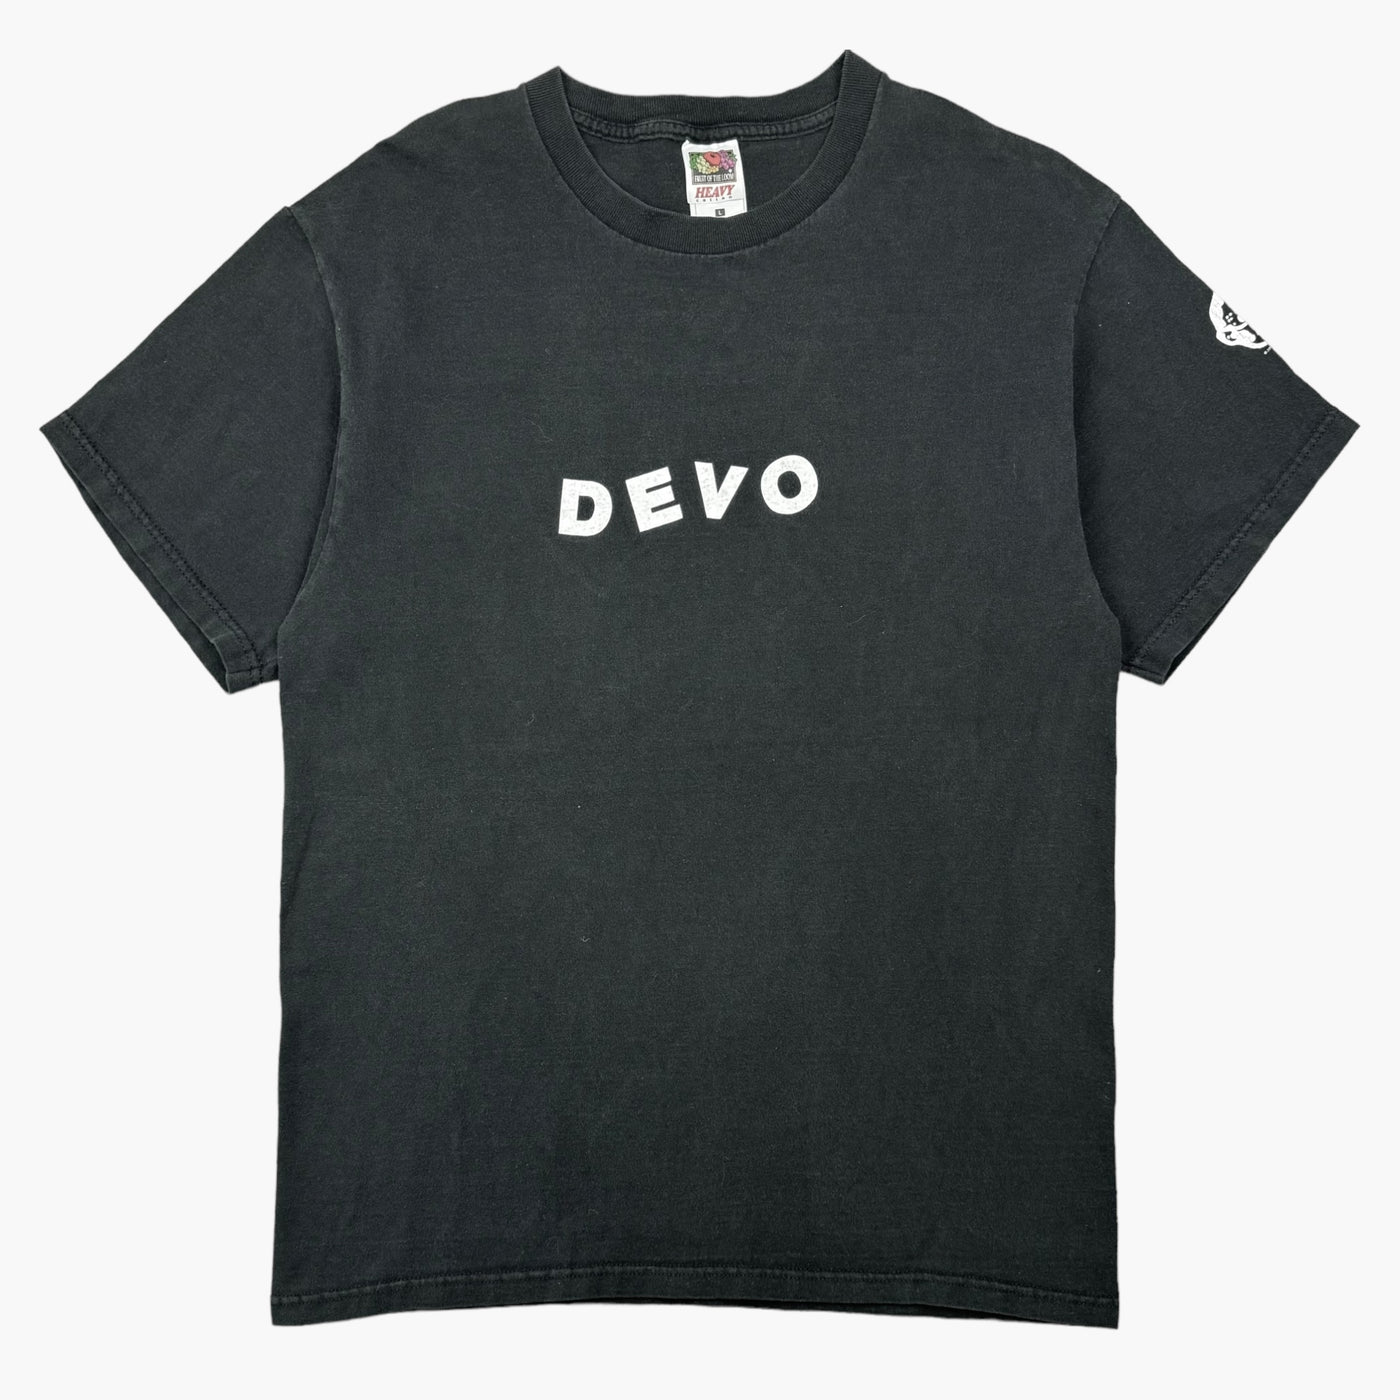 2000 DEVO T-SHIRT